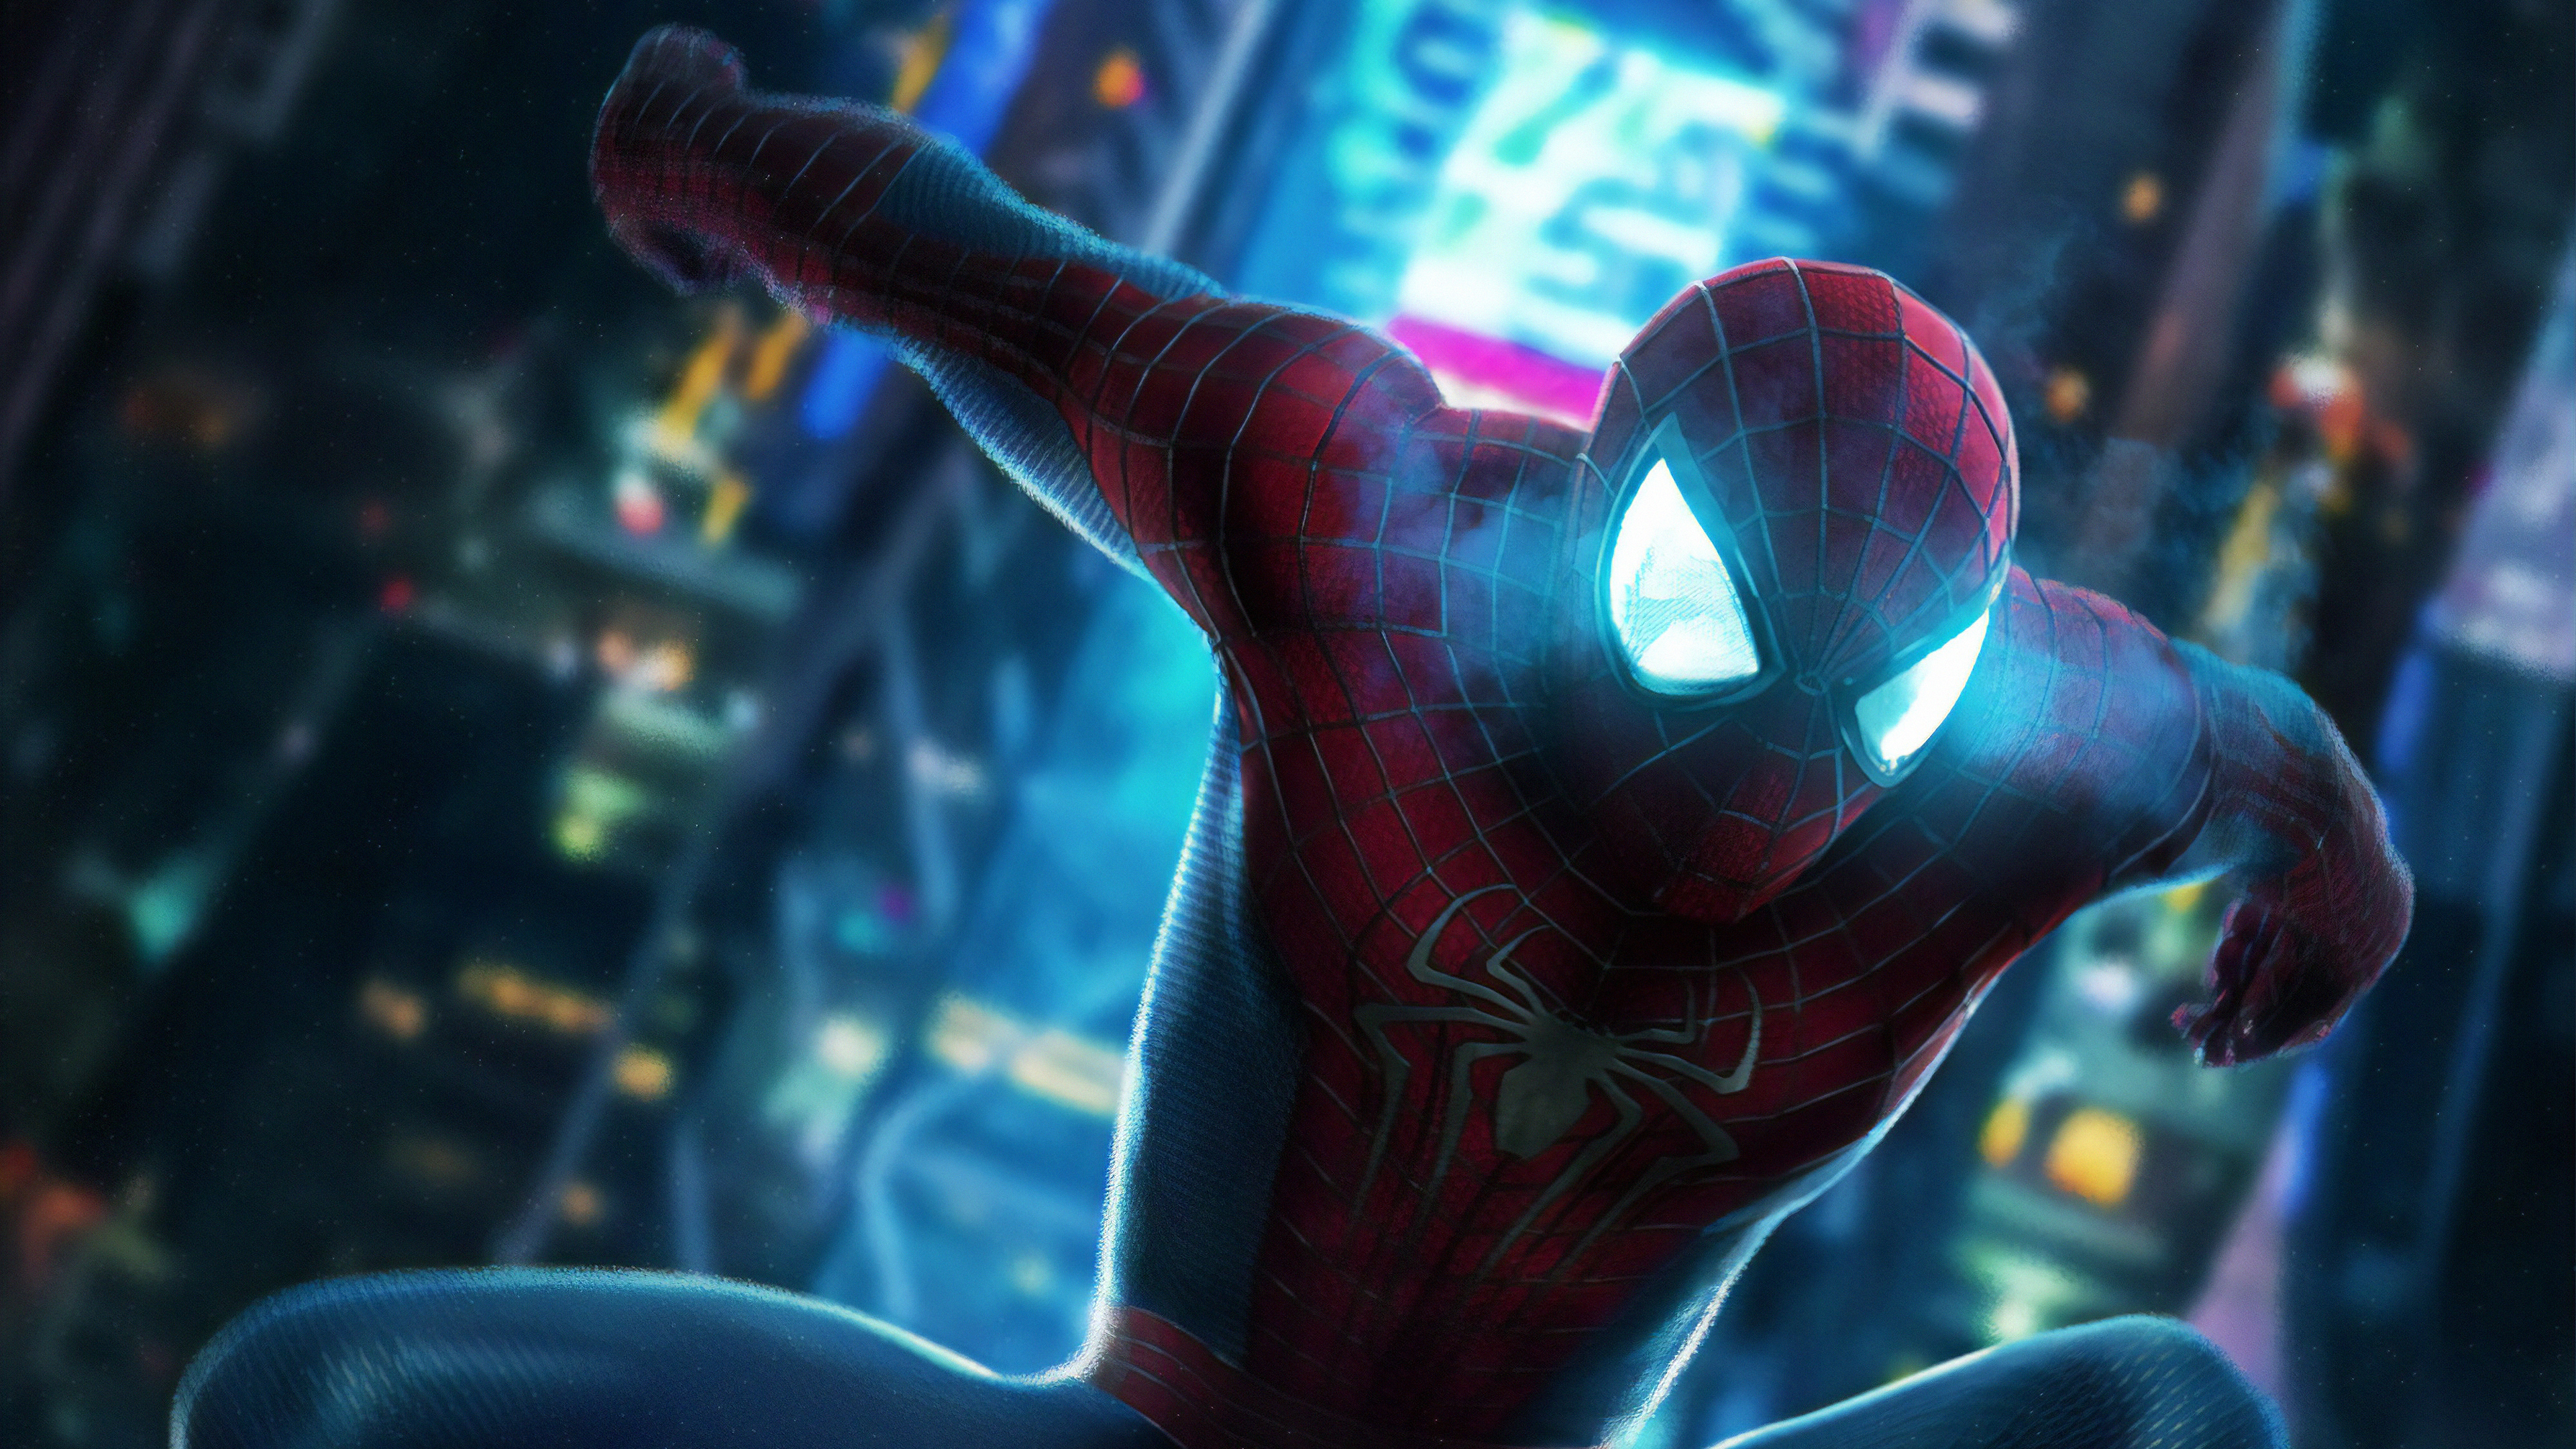 Download Comic Spider Man 4k Ultra Hd Wallpaper